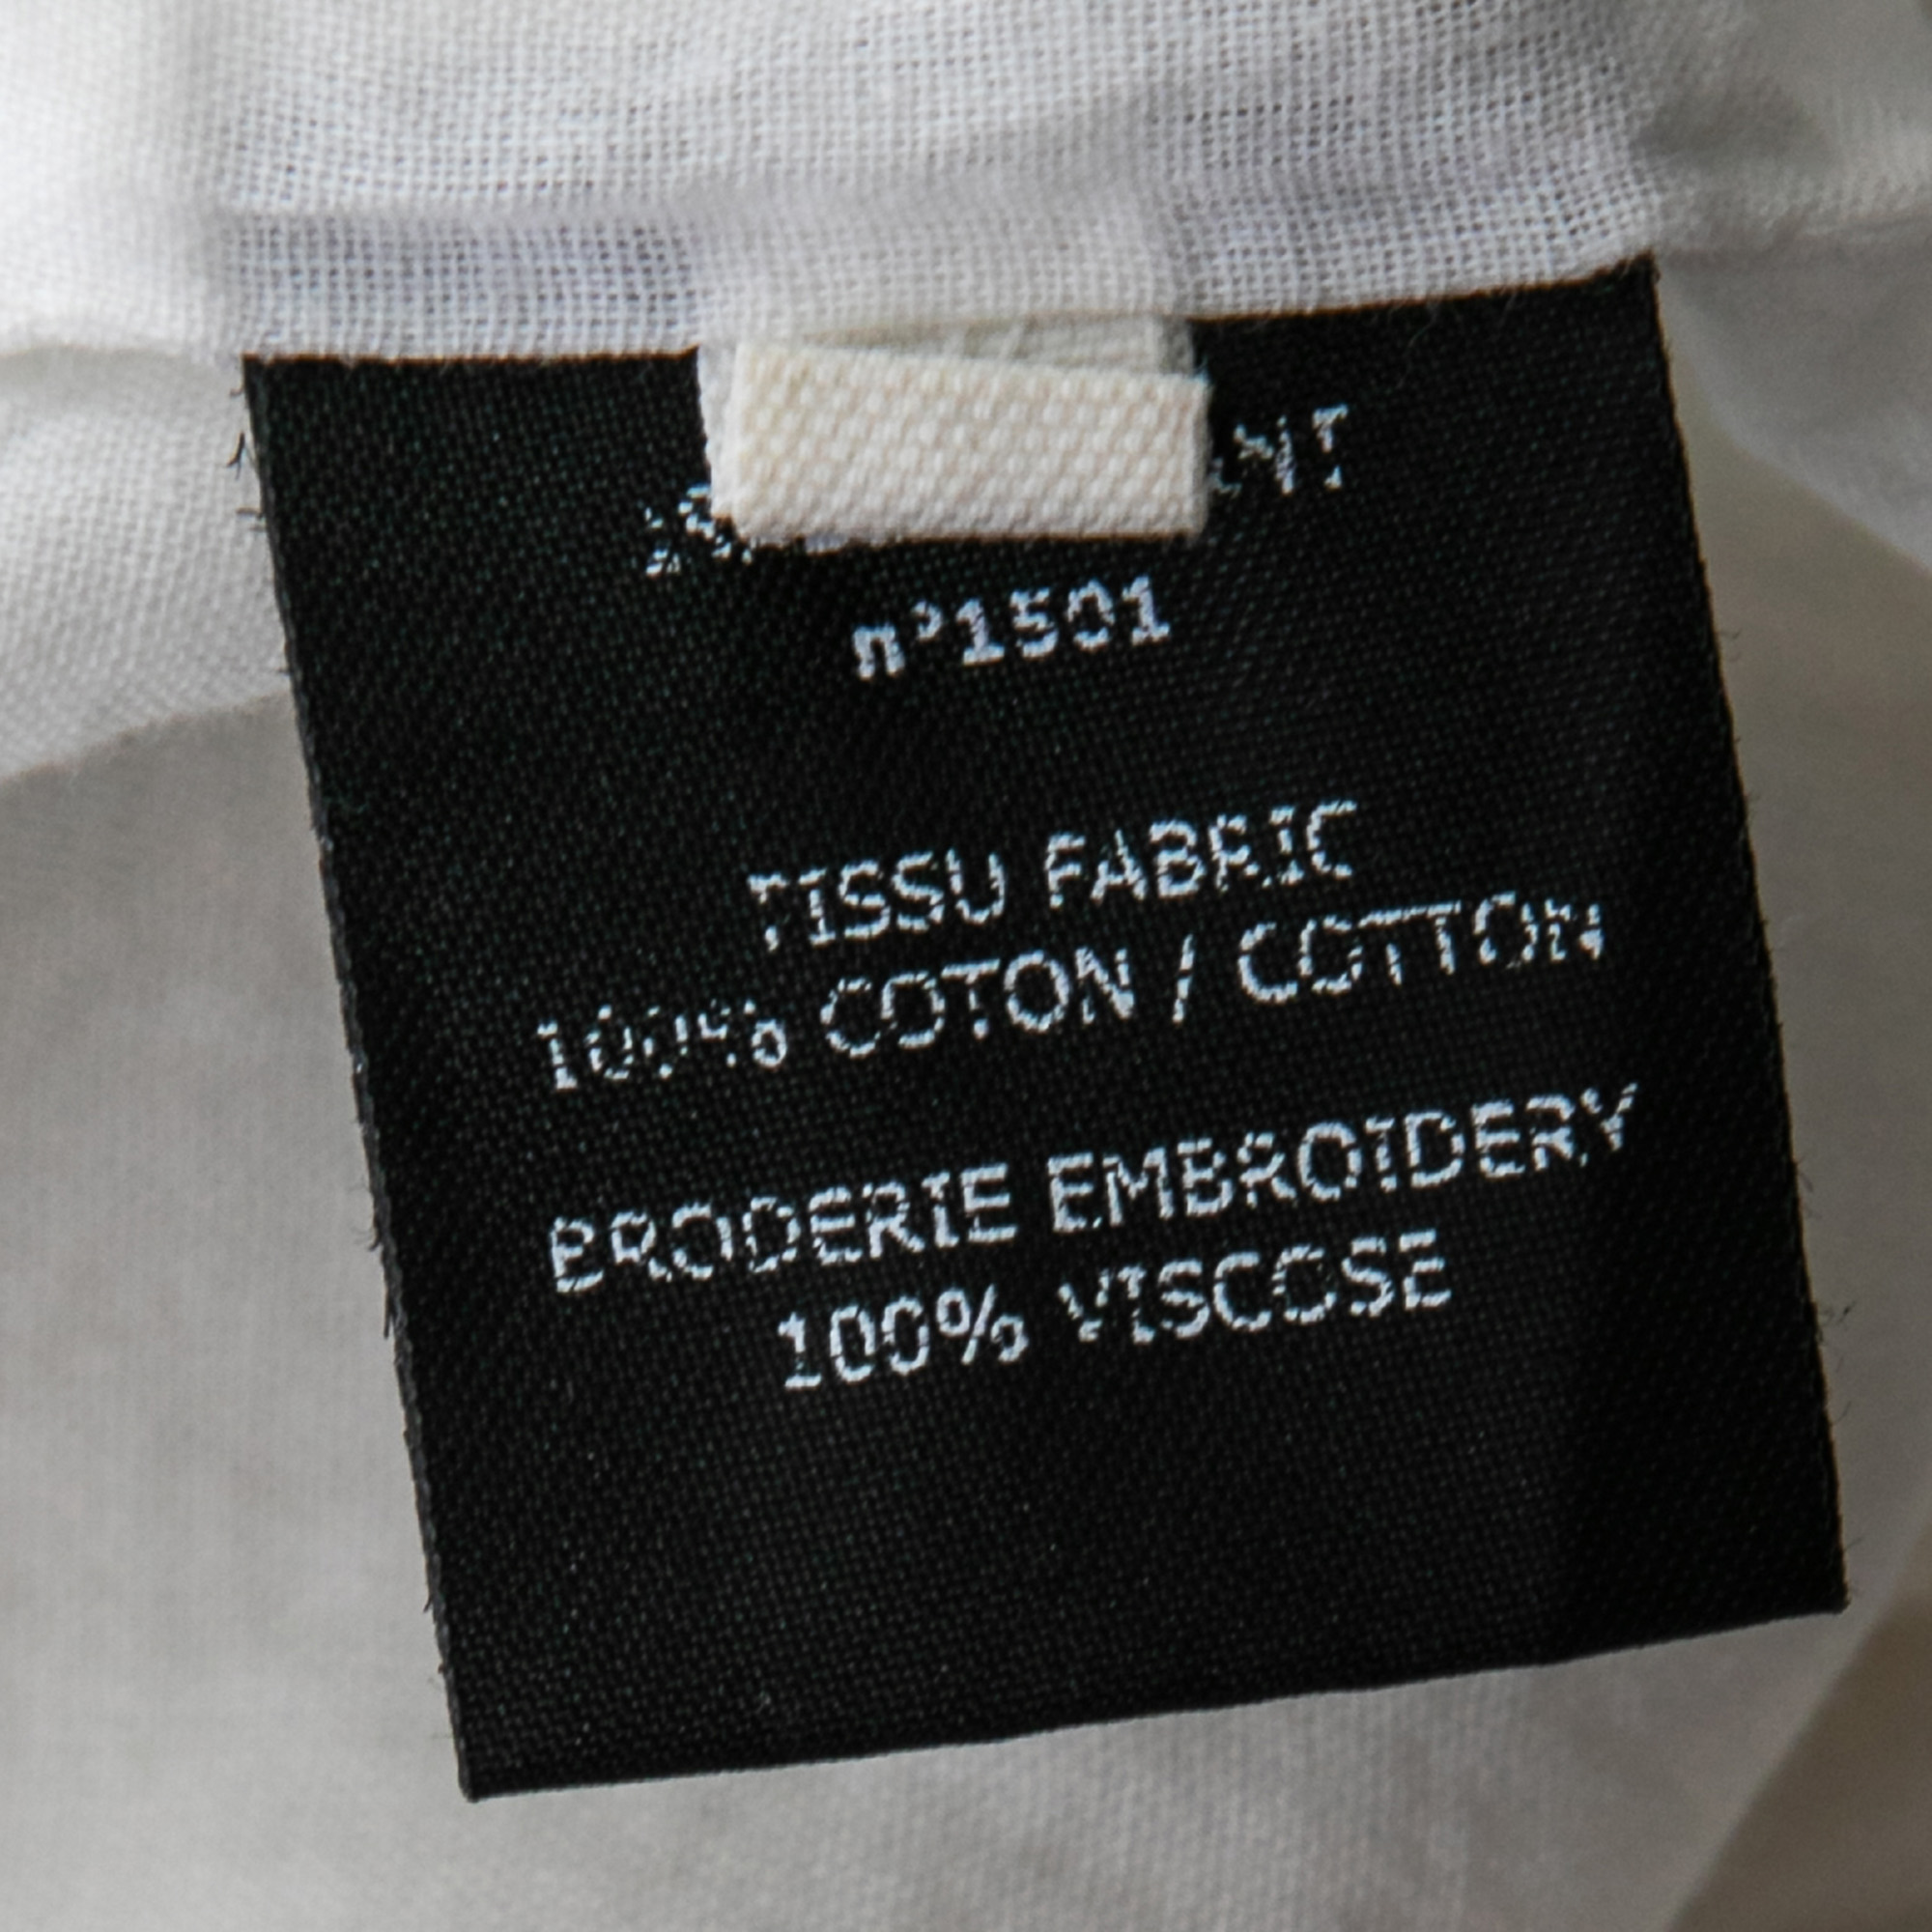 Isabel Marant Etoile White Embroidered Cotton Mini Skirt S